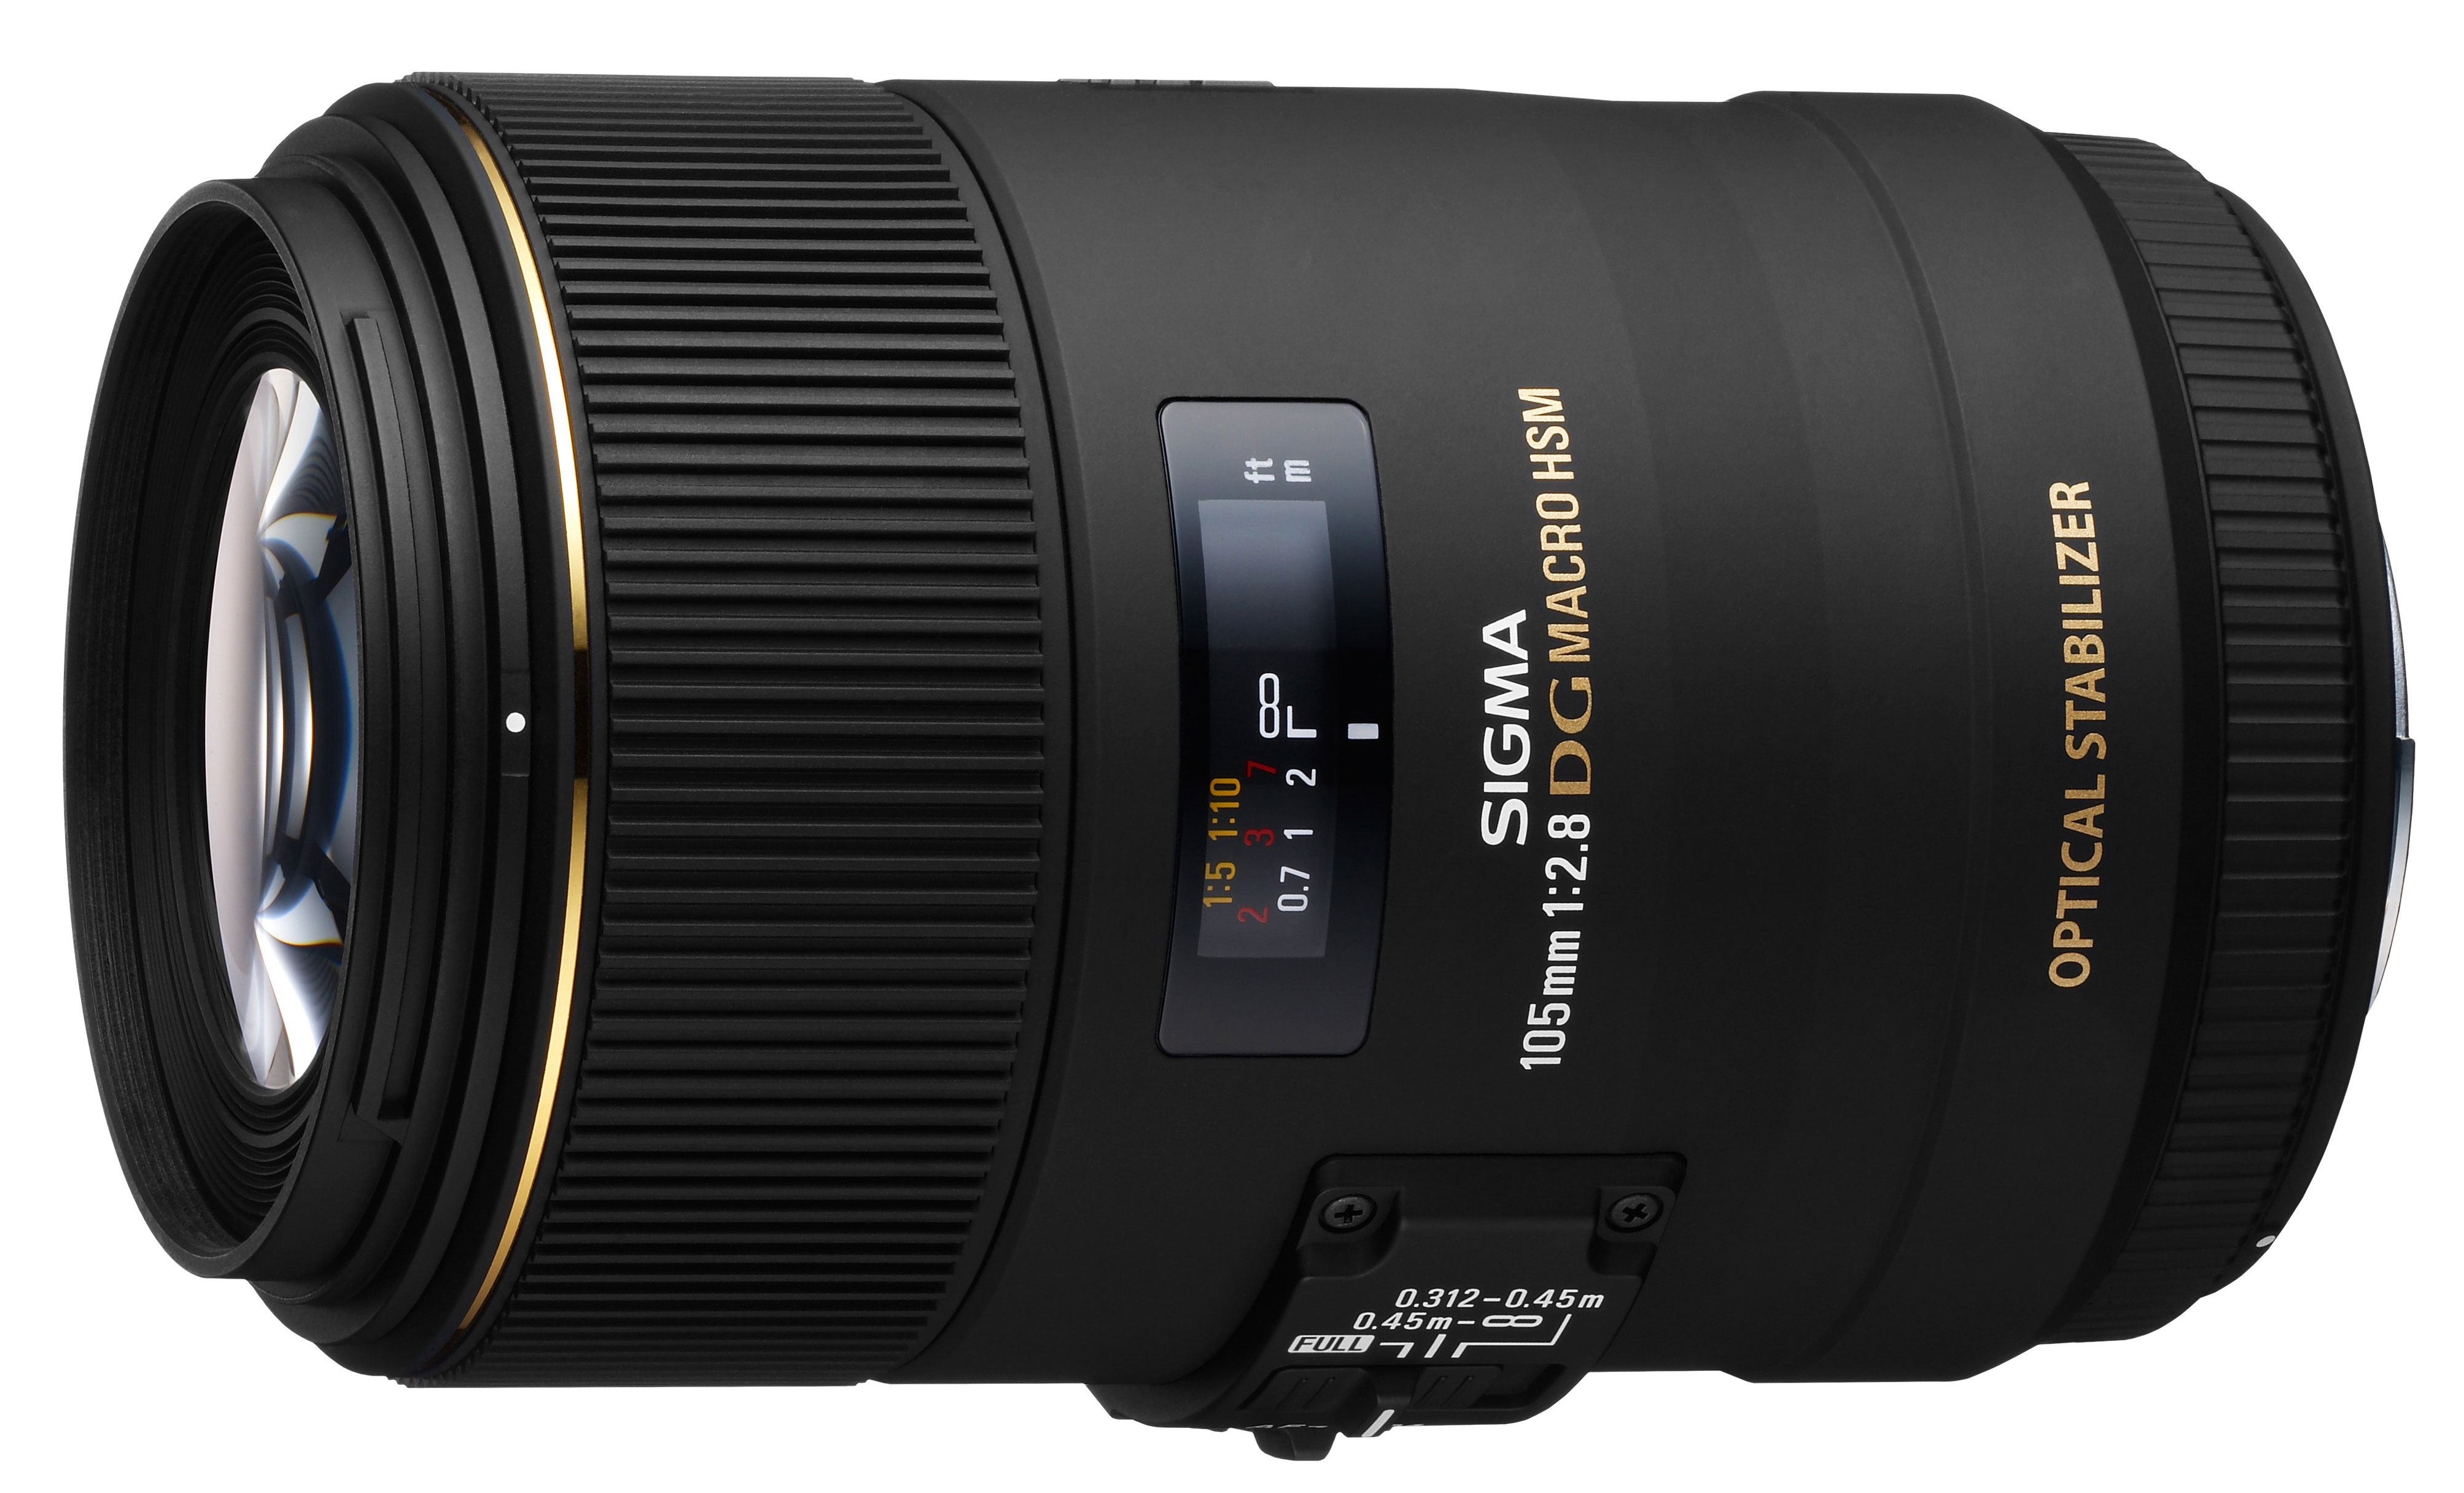 Sigma 105mm F2.8 macro lens